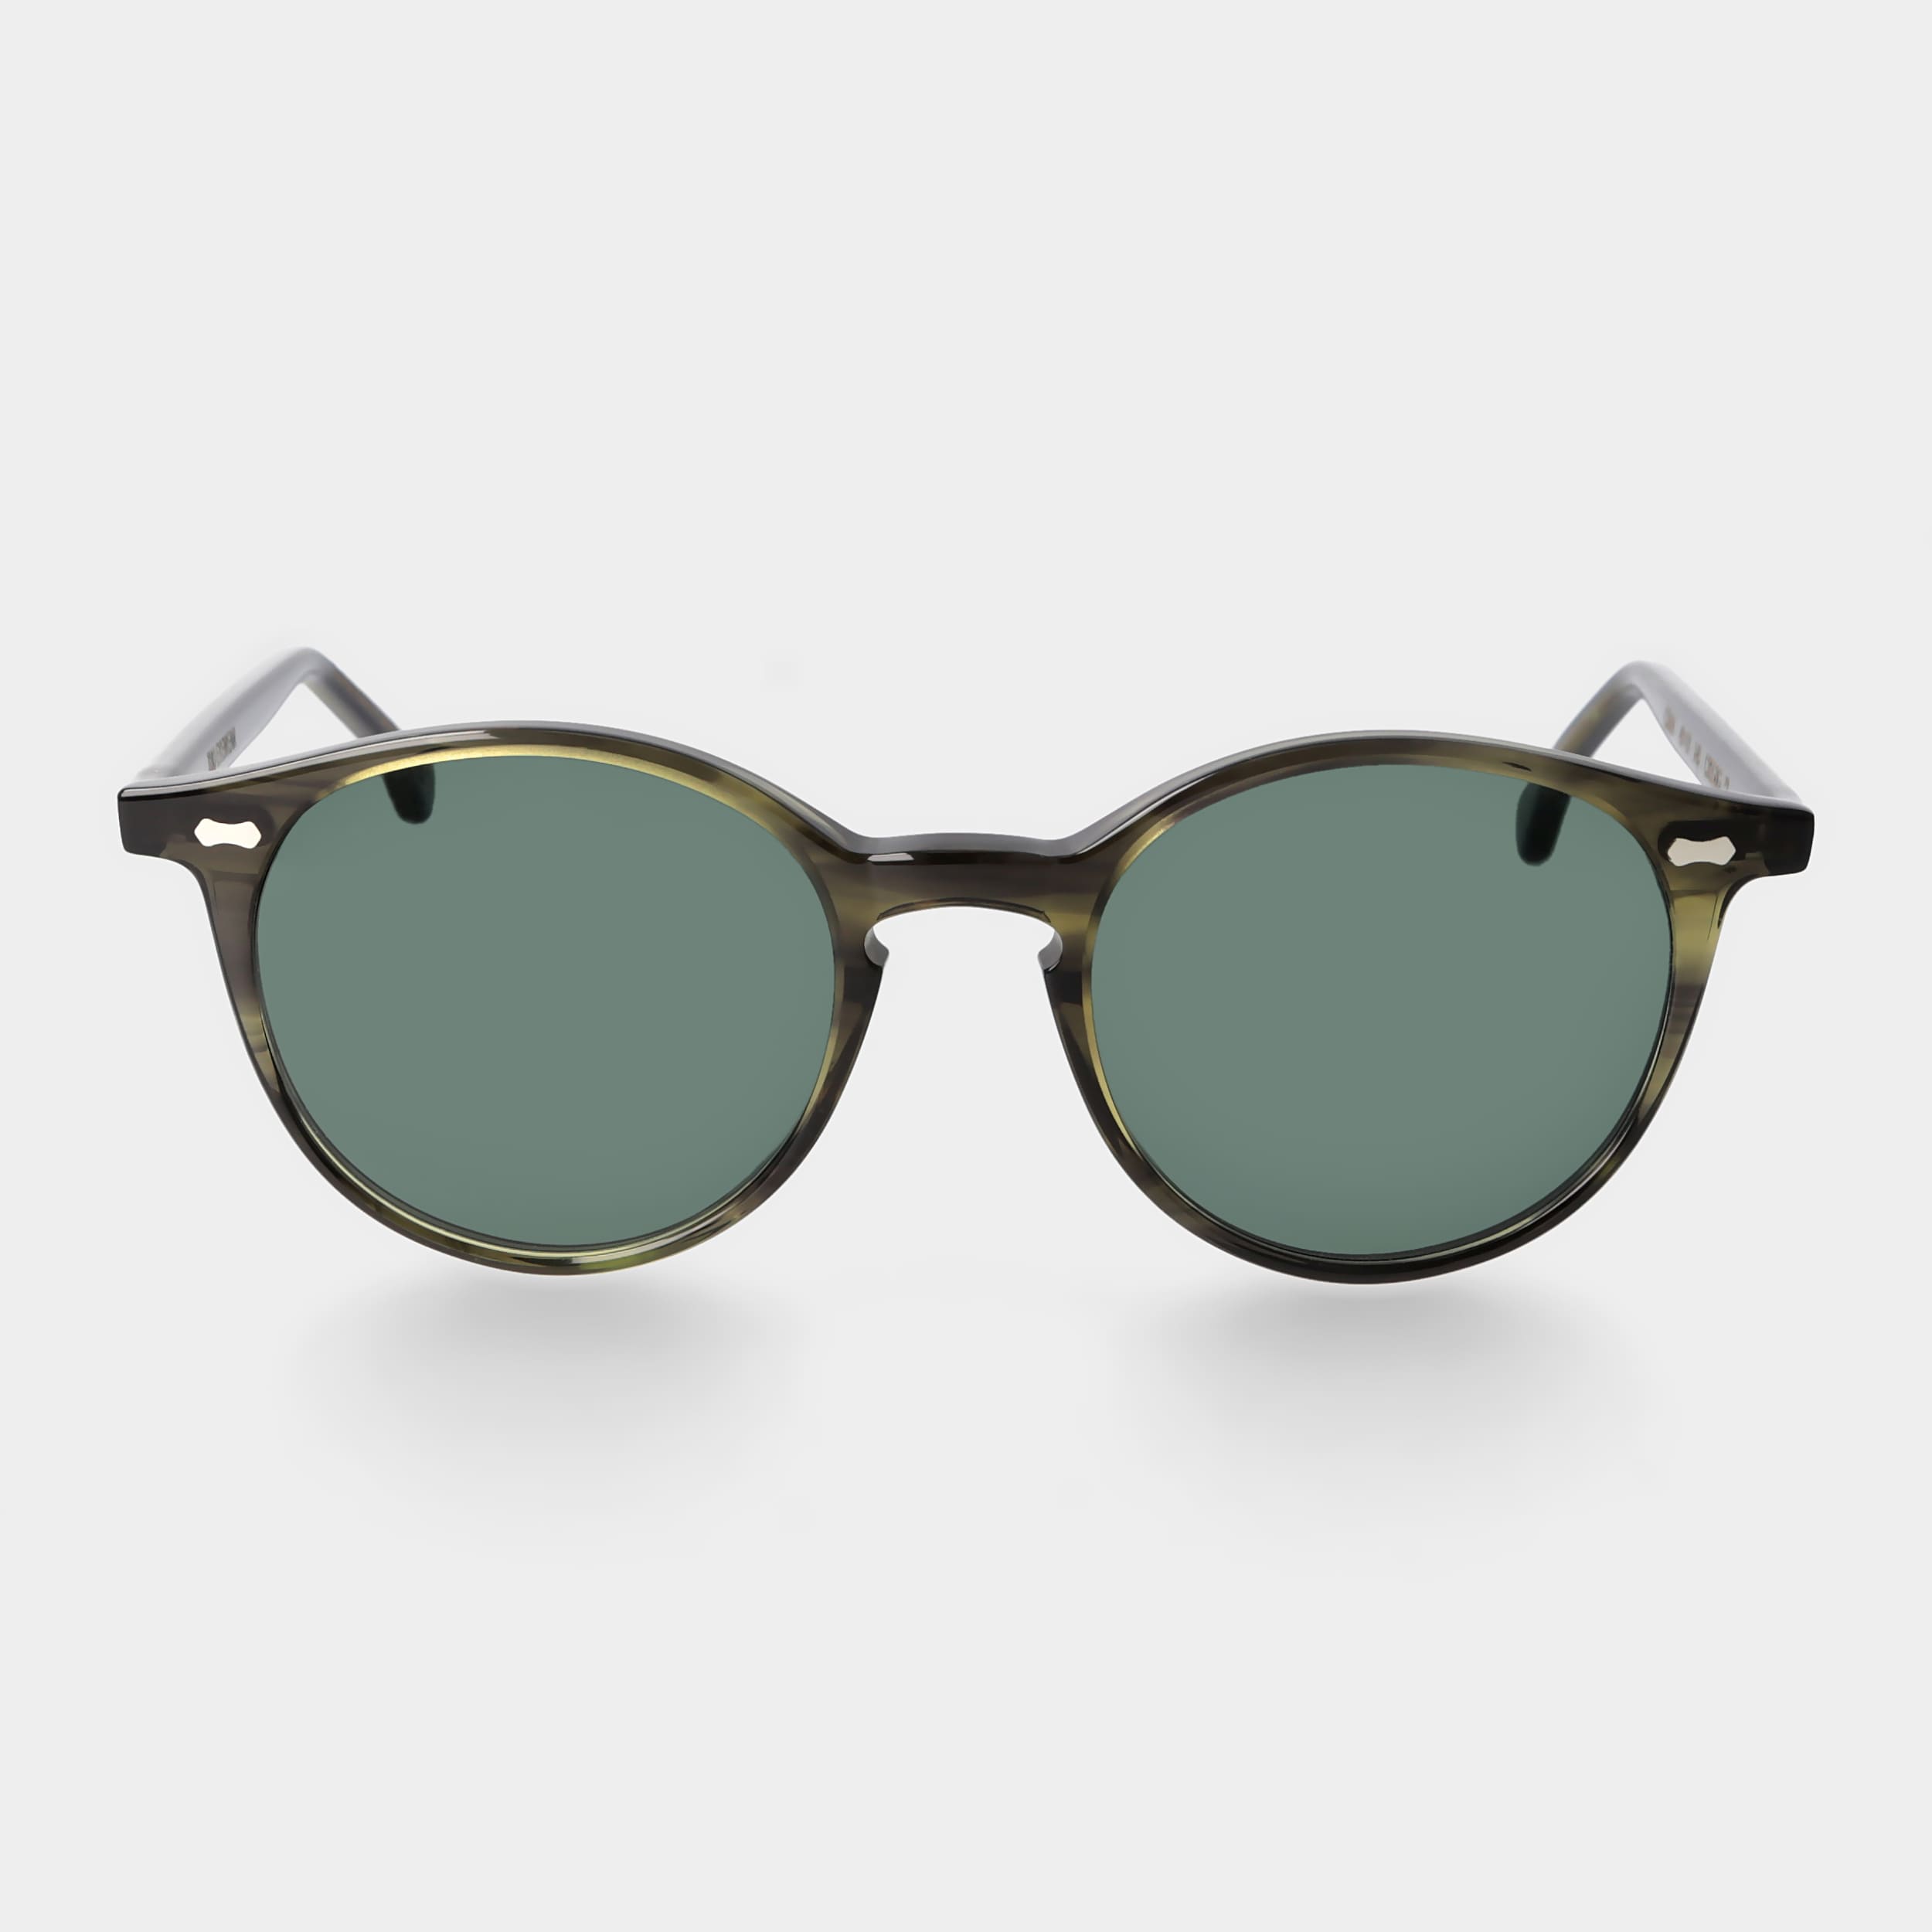 sunglasses-cran-eco-green-bottle-green-sustainable-tbd-eyewear-front